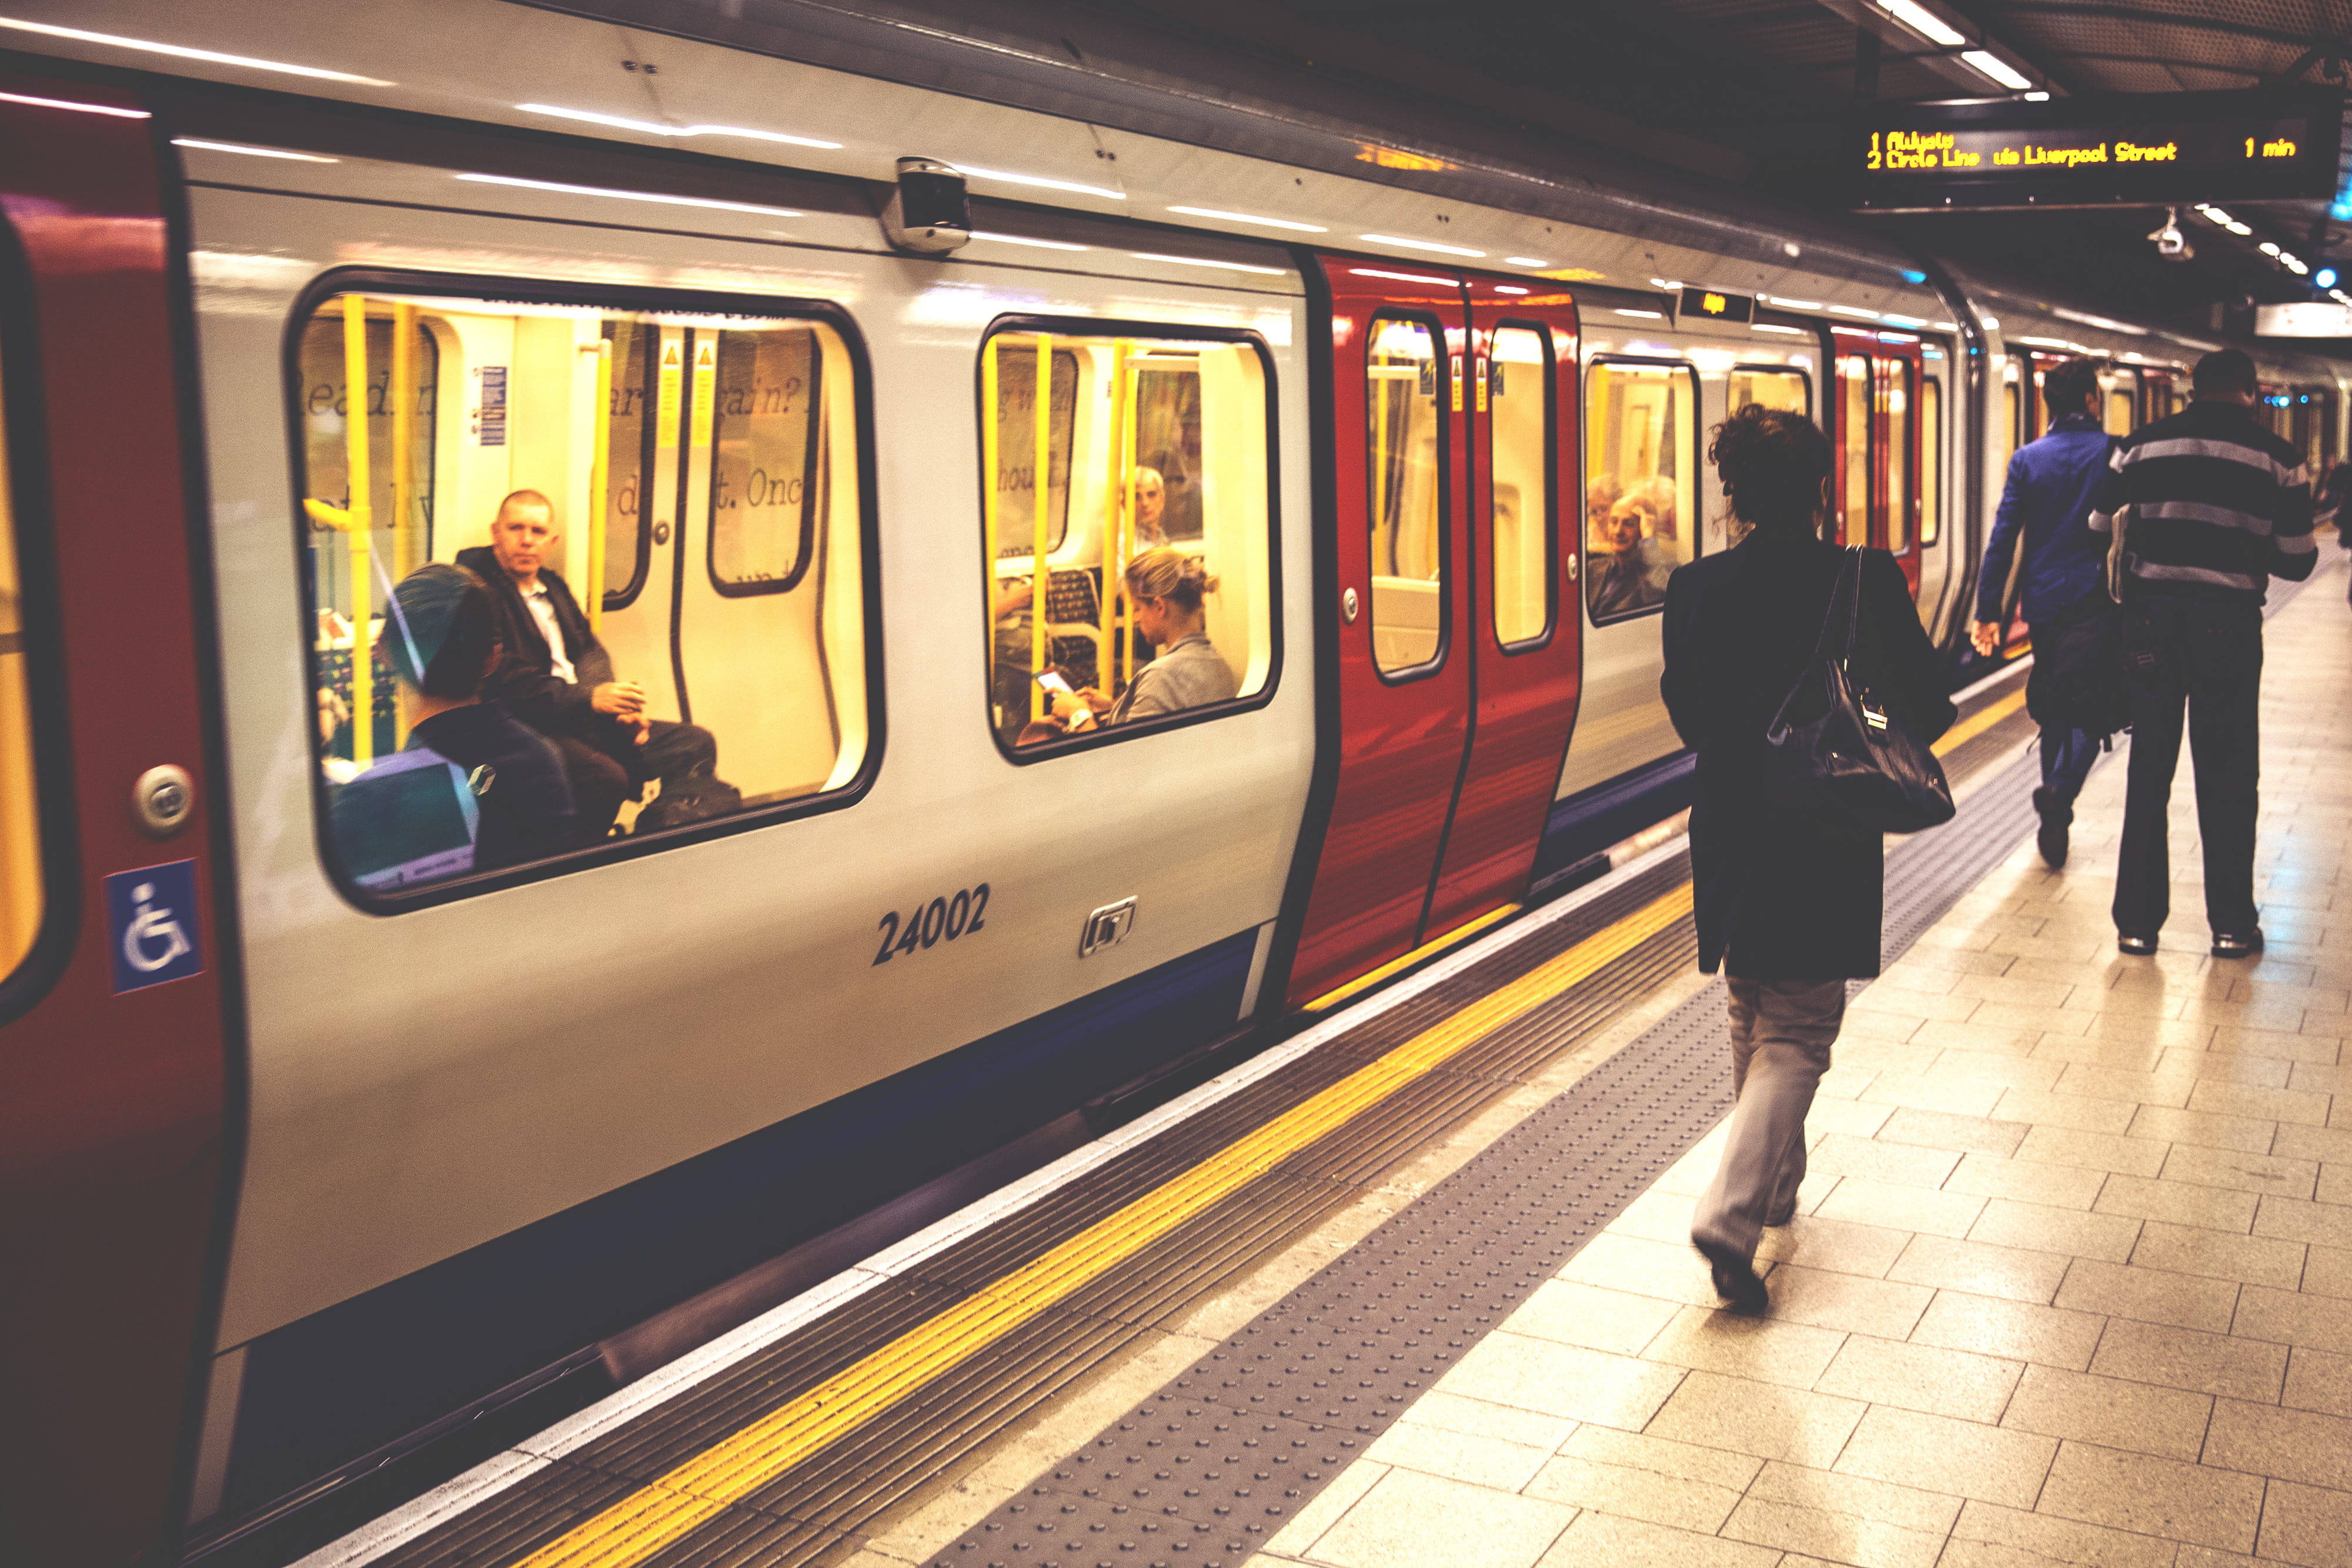 People walking along the platform on the London Underground, subway